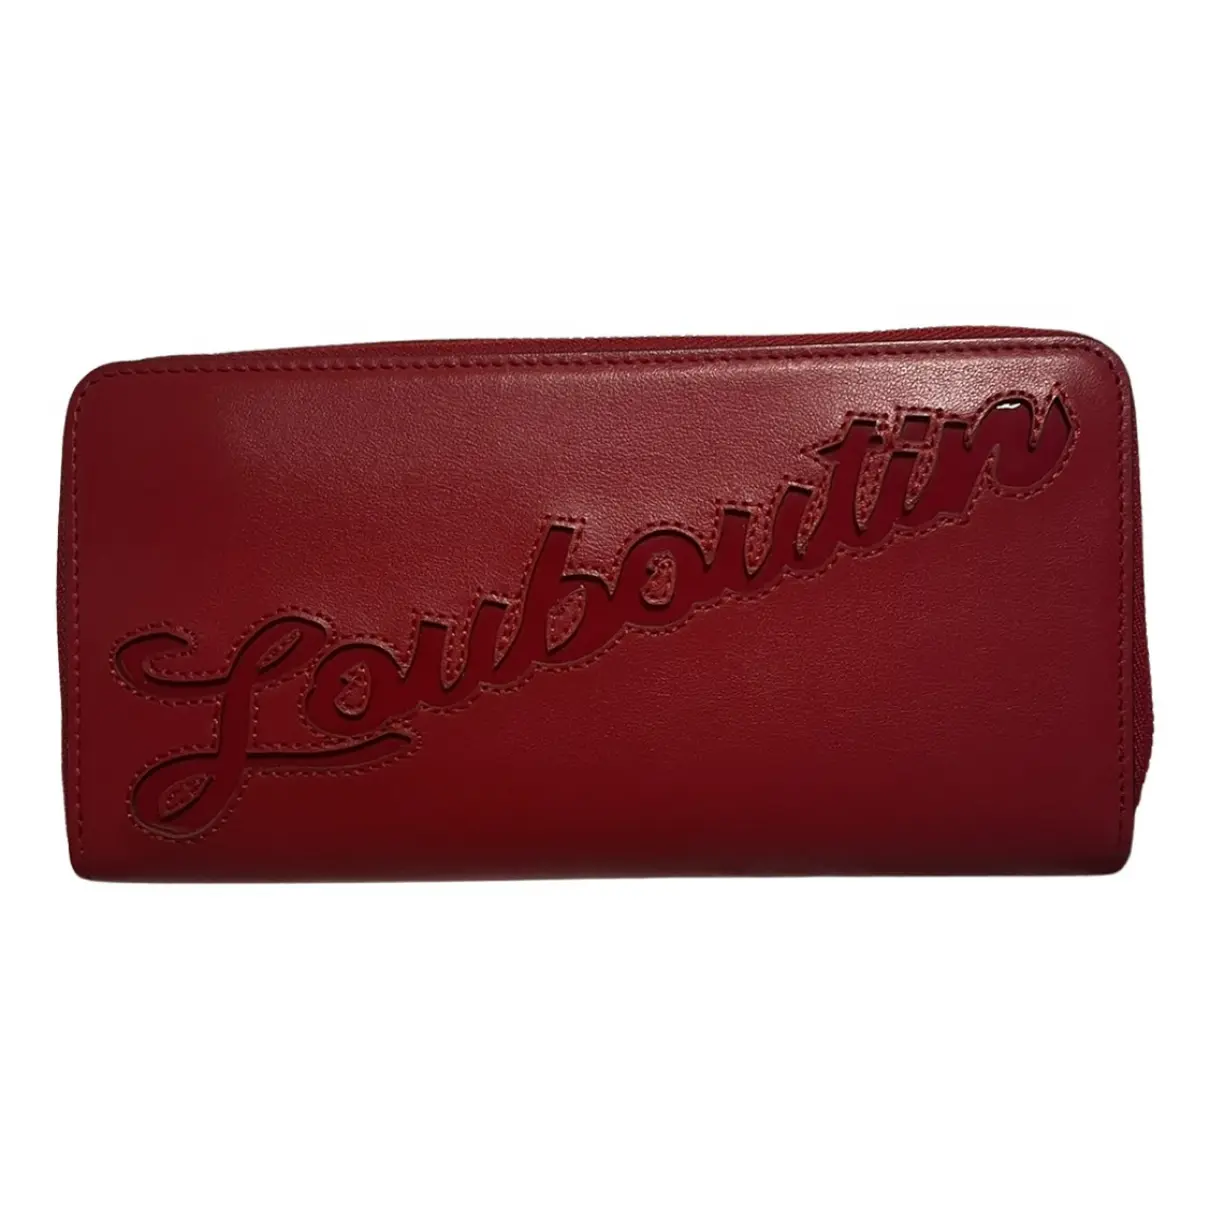 Leather wallet Christian Louboutin